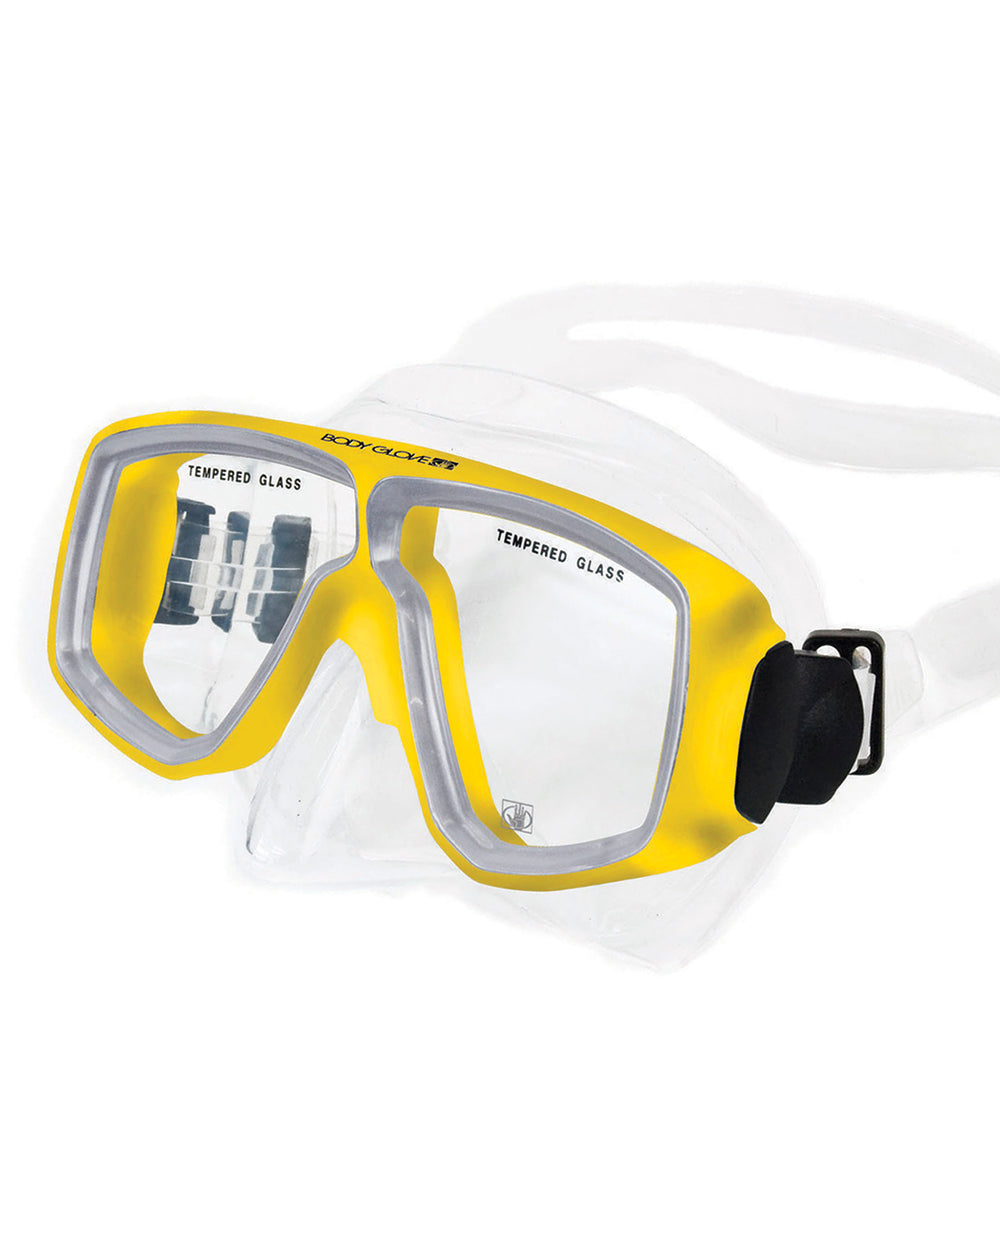 Mild Optical Diving Snorkeling Mask - Yellow